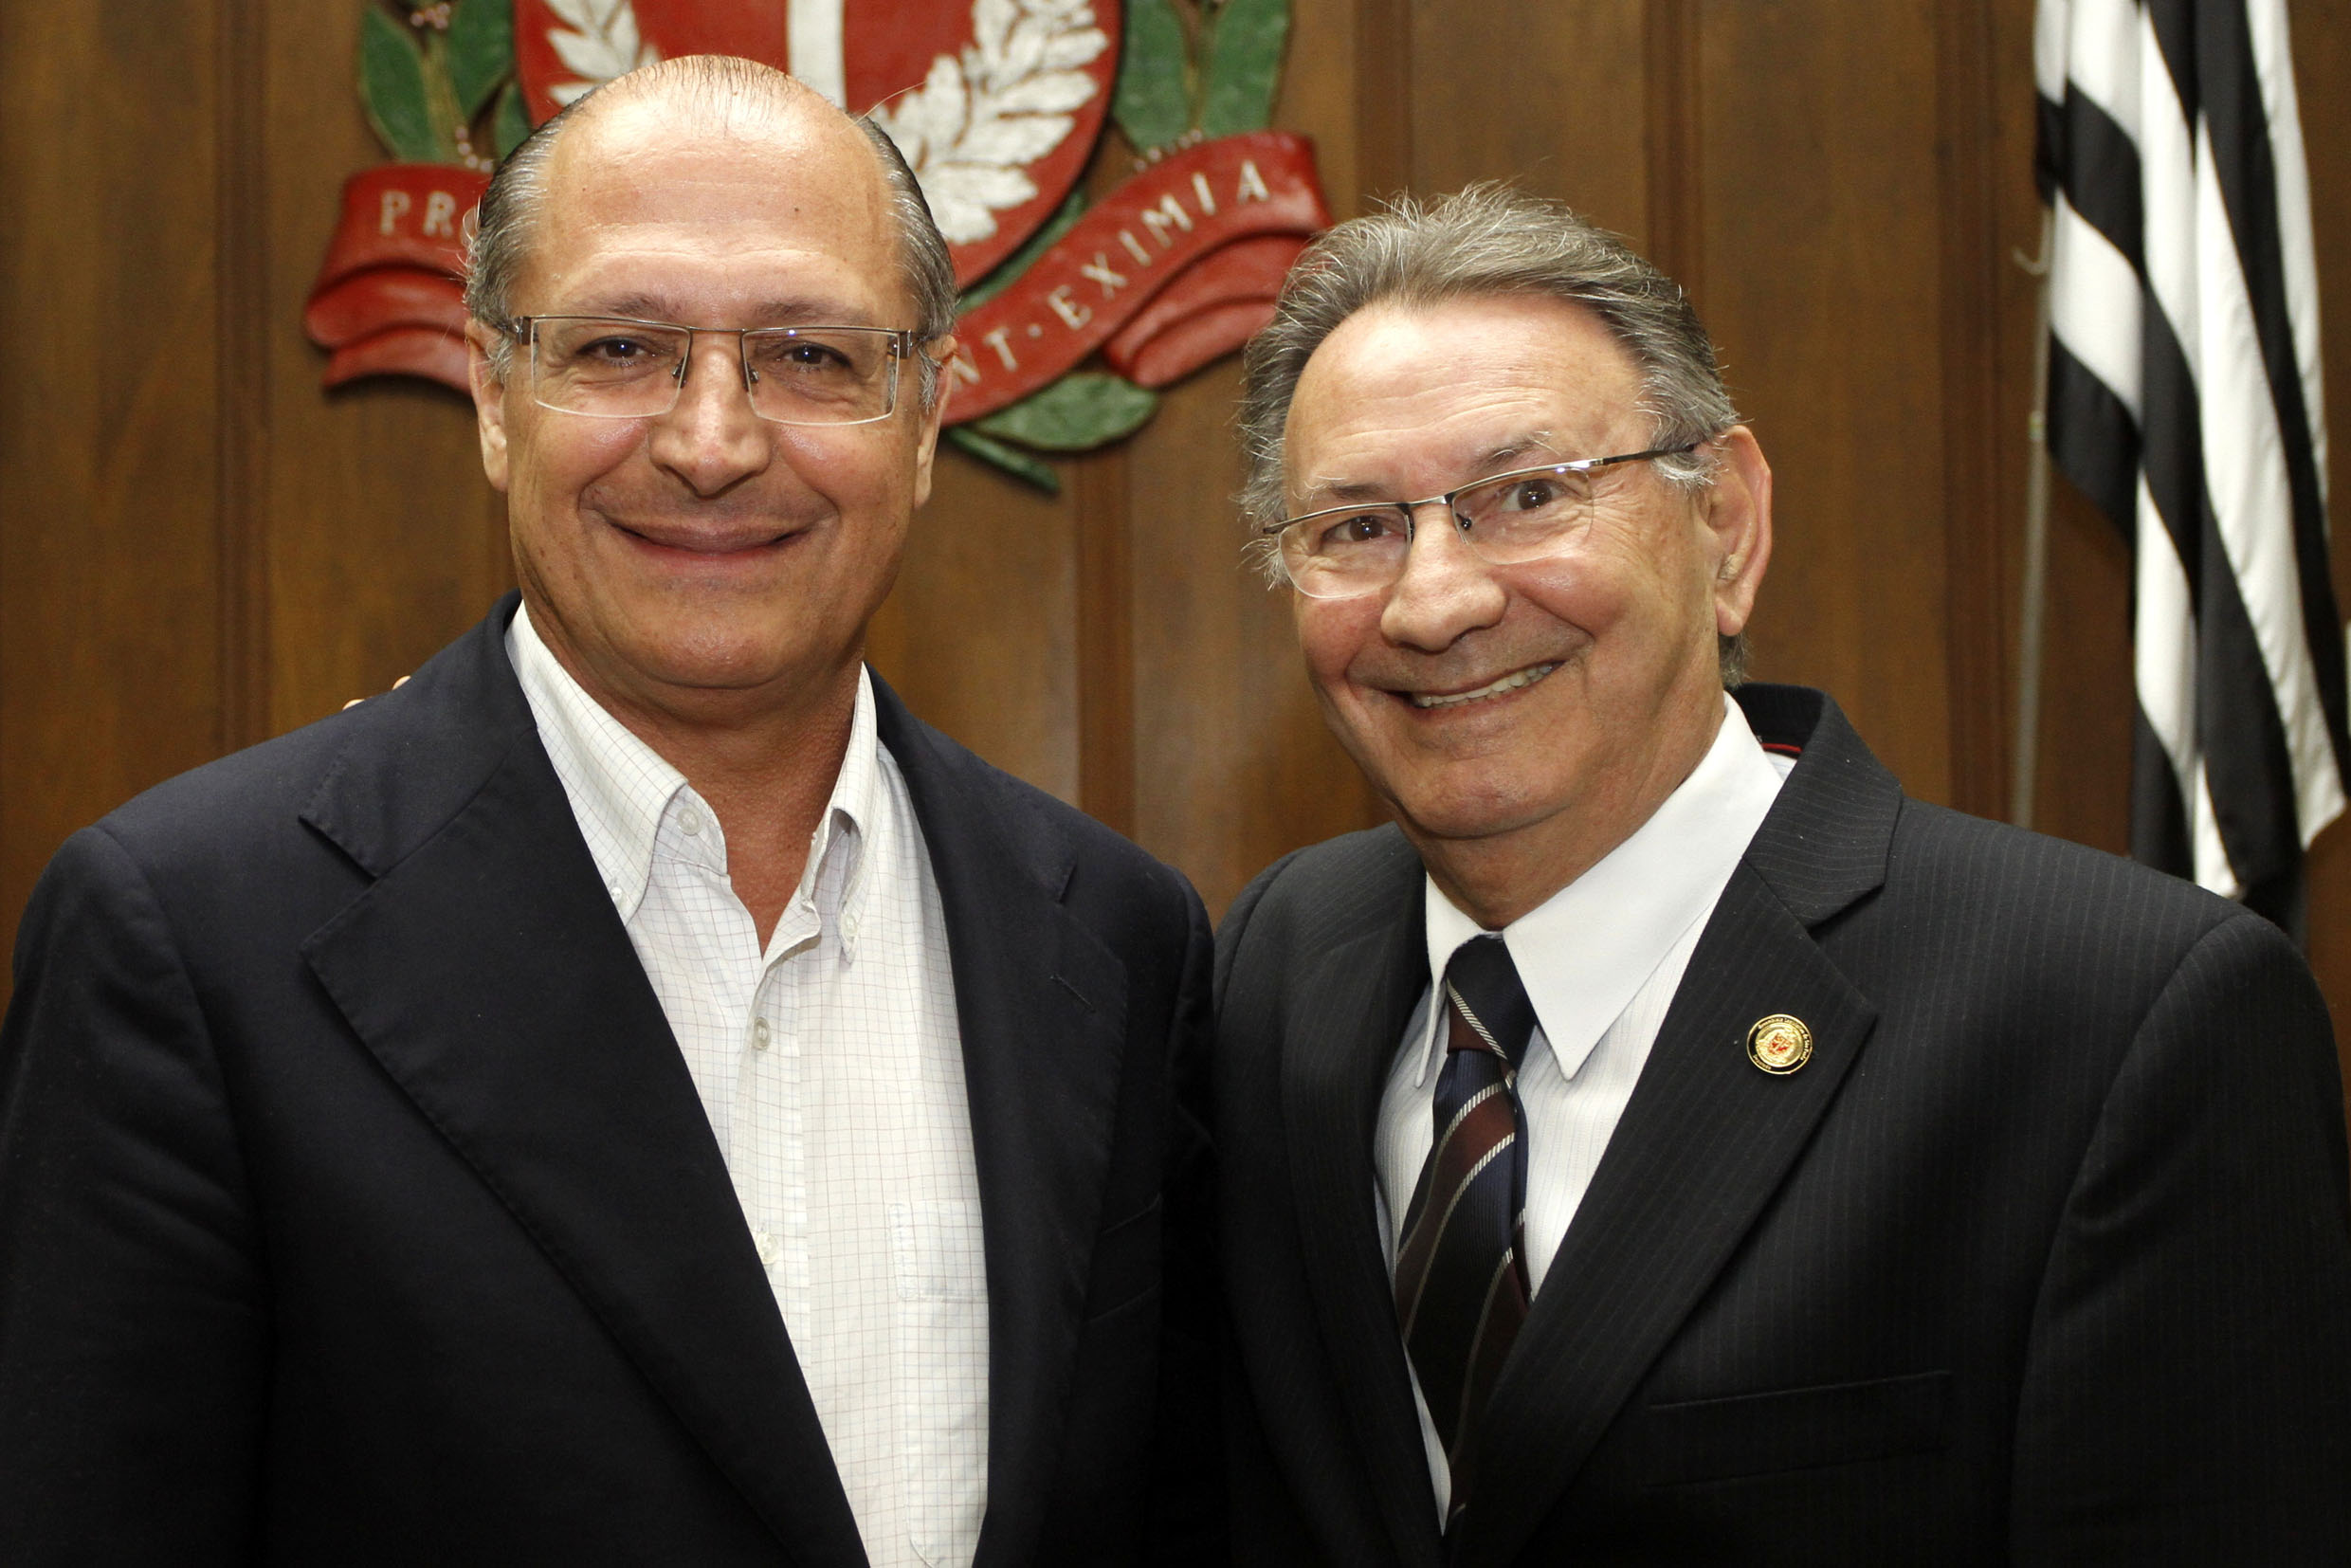 Geraldo Alckmin e Dr. Ulysses<a style='float:right;color:#ccc' href='https://www3.al.sp.gov.br/repositorio/noticia/N-02-2014/fg158423.jpg' target=_blank><i class='bi bi-zoom-in'></i> Clique para ver a imagem </a>